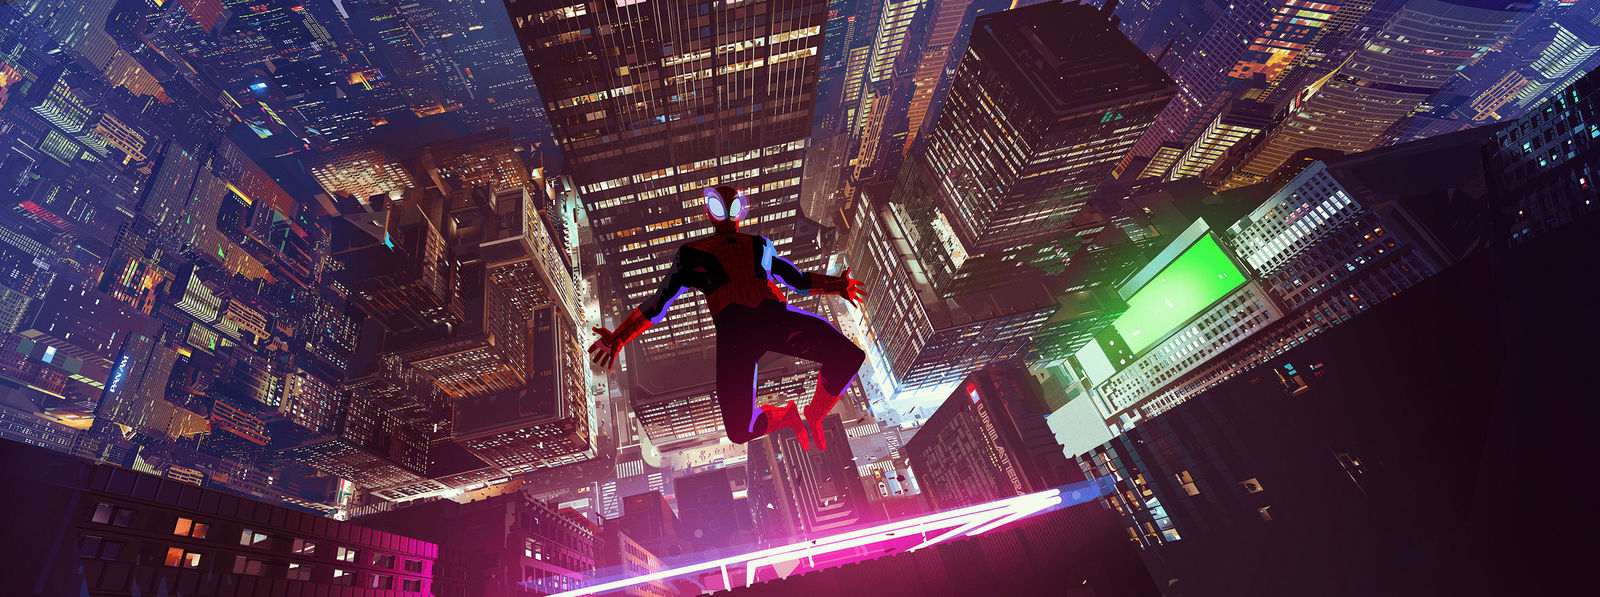 Spider-Man-Into-the-Spider-Verse-Concept-Art-Alberto-Mieglo-Keyframe-01.jpg